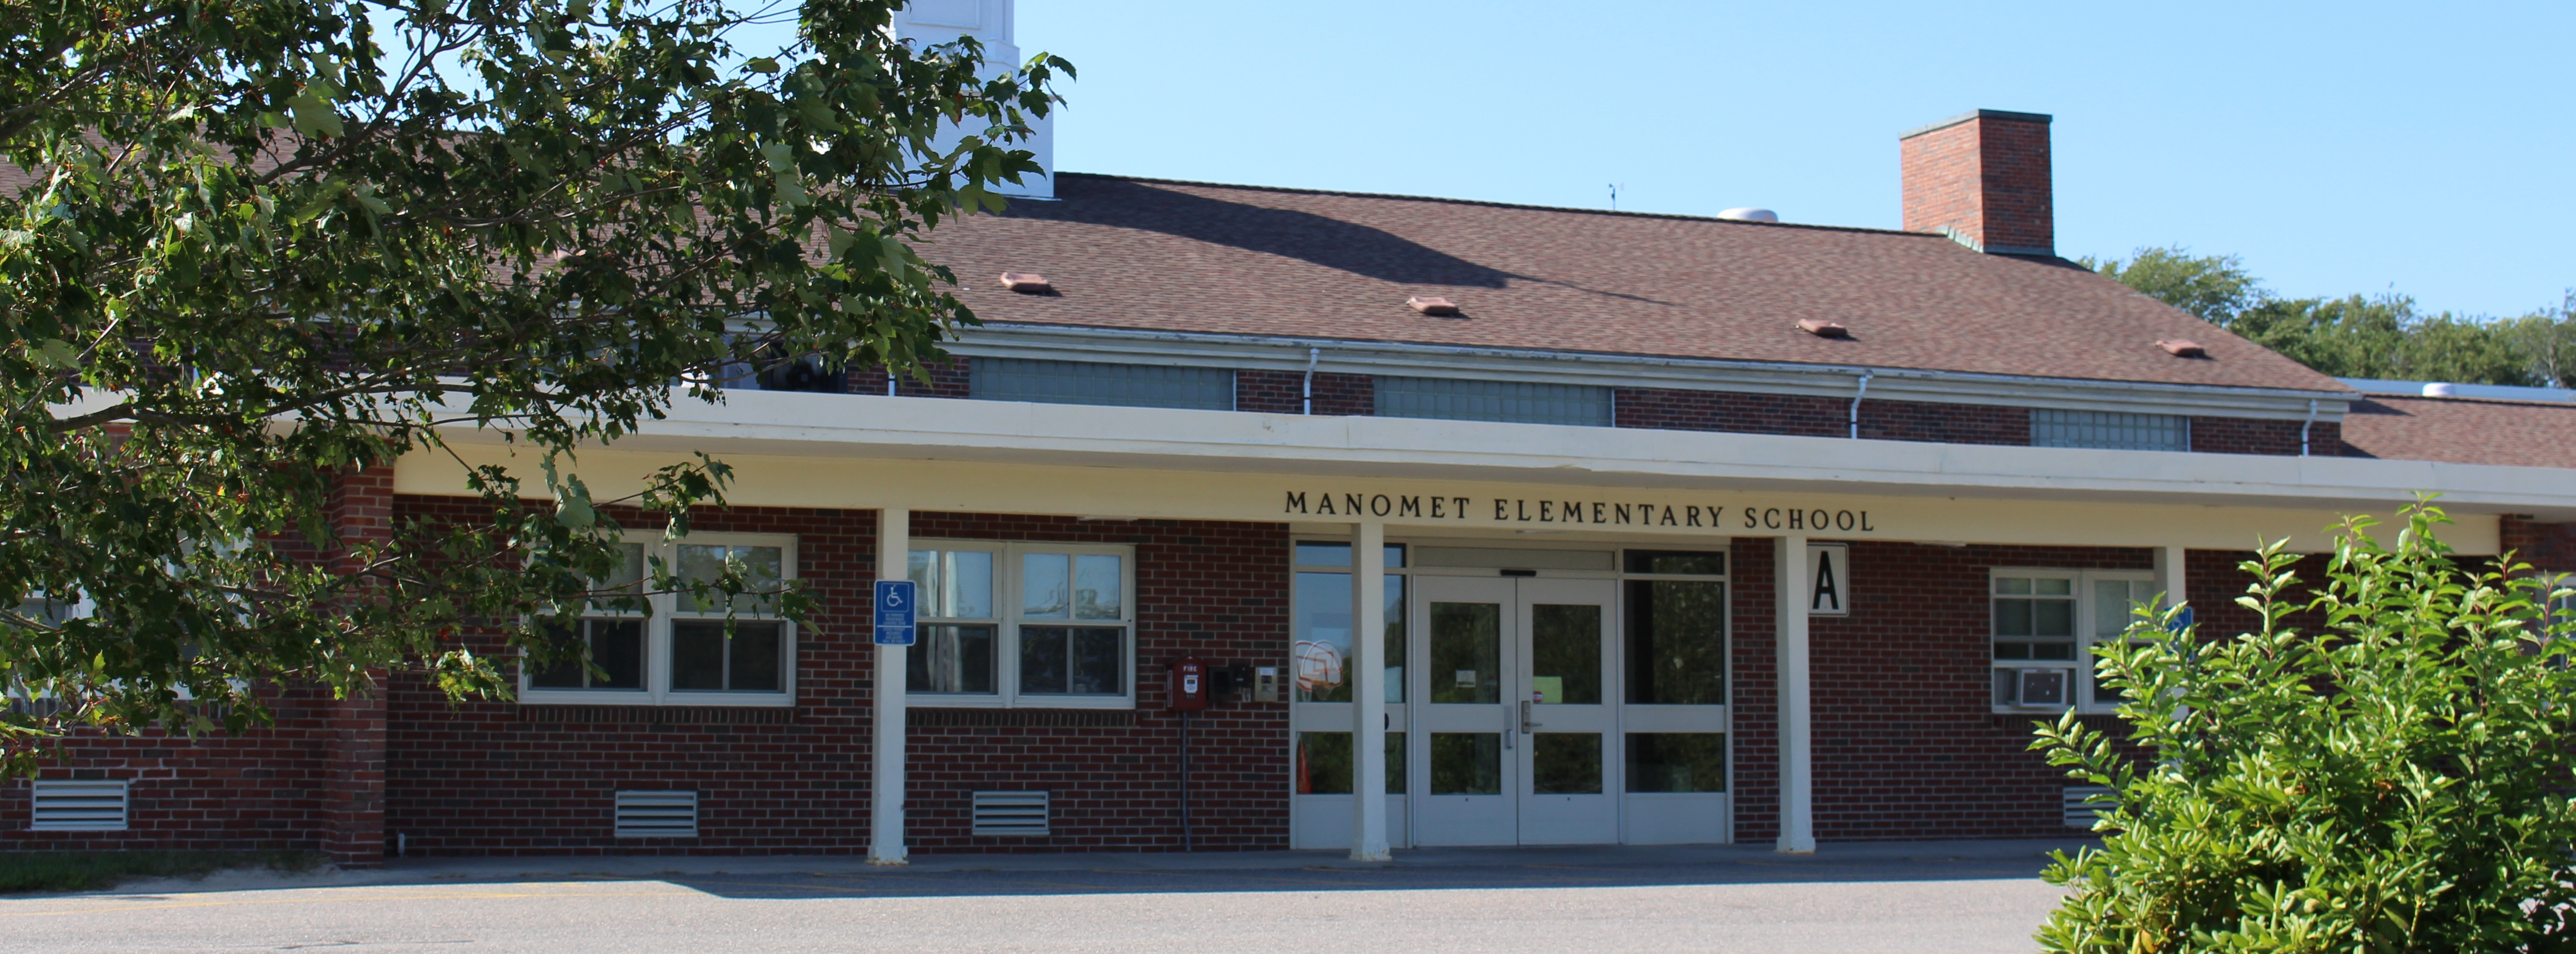 Manomet Elementary School